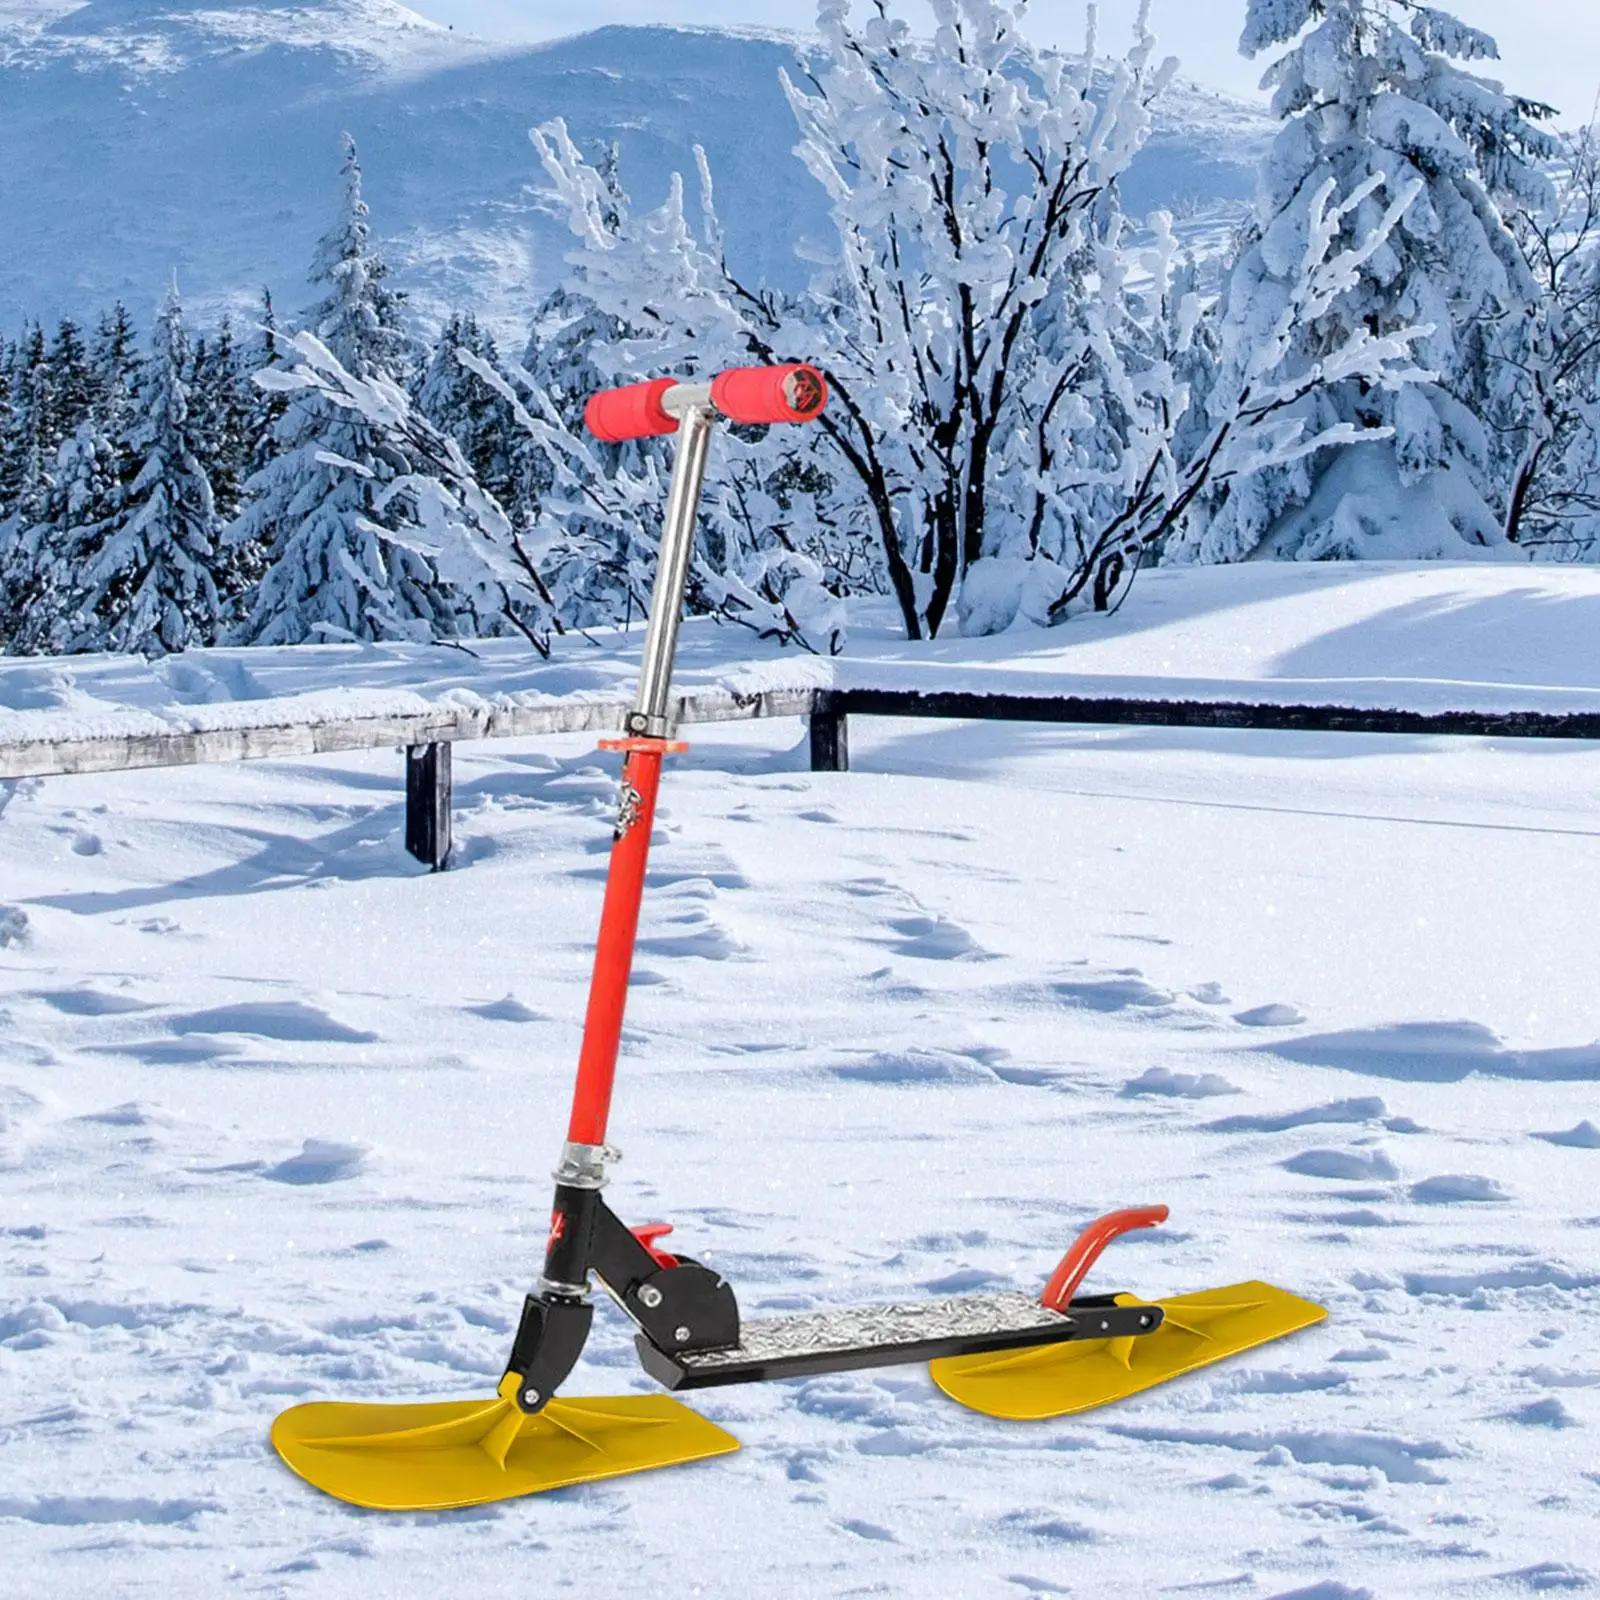 2x Snow Scooter Ski Sled Creative Ski Attachment Flat Bottom Toboggan Ski Board Sleigh for Snowboard Outdoor Christmas Children